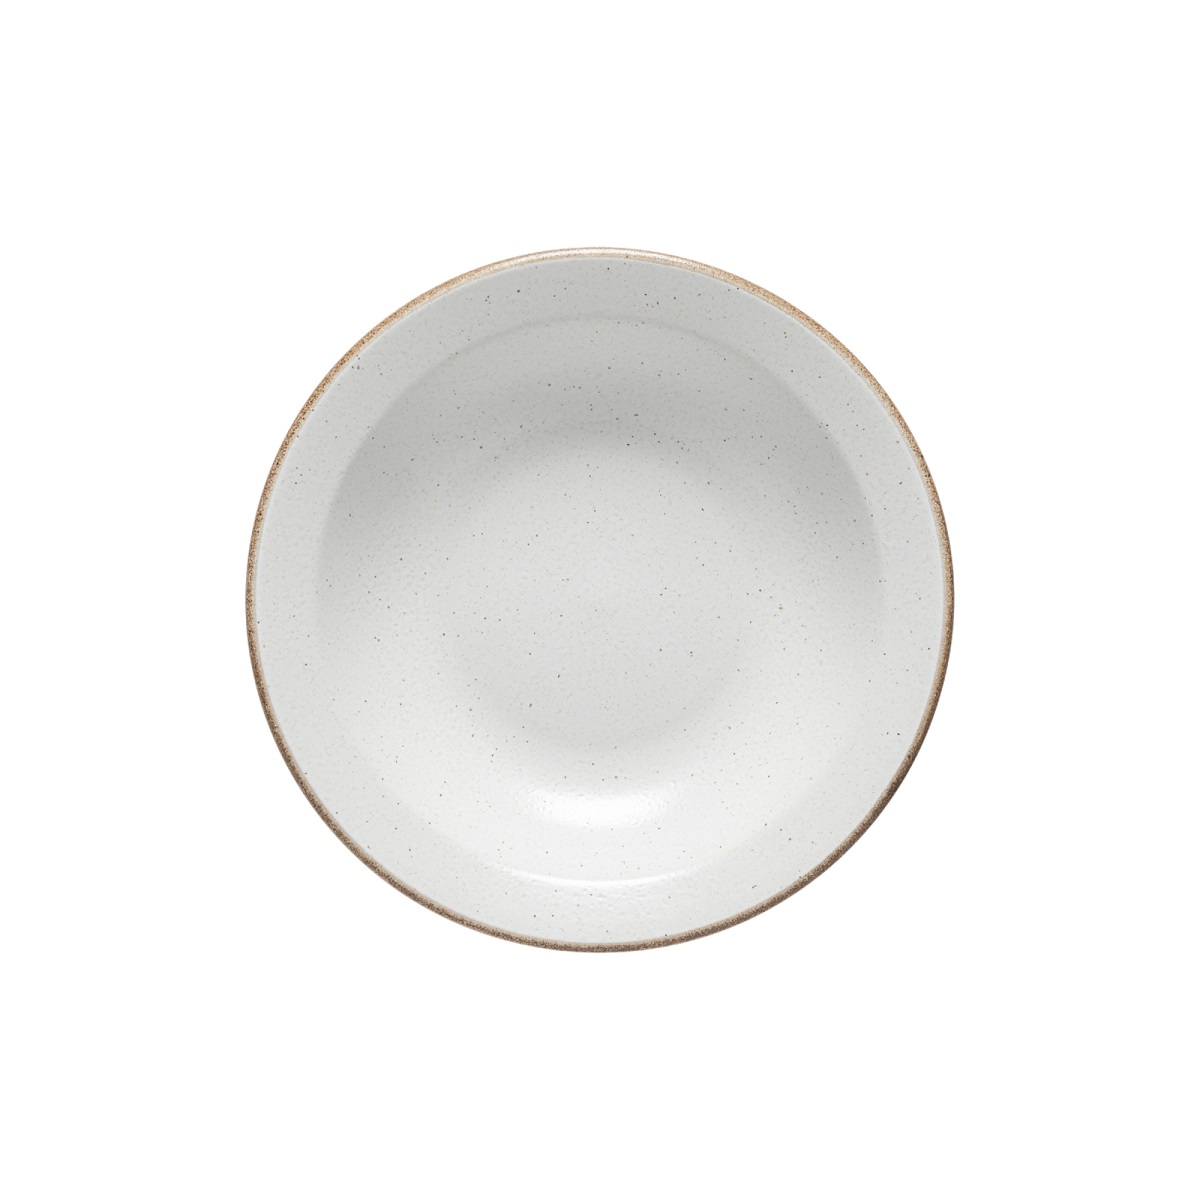 Positano White Soup/pasta Plate 24cm Gift